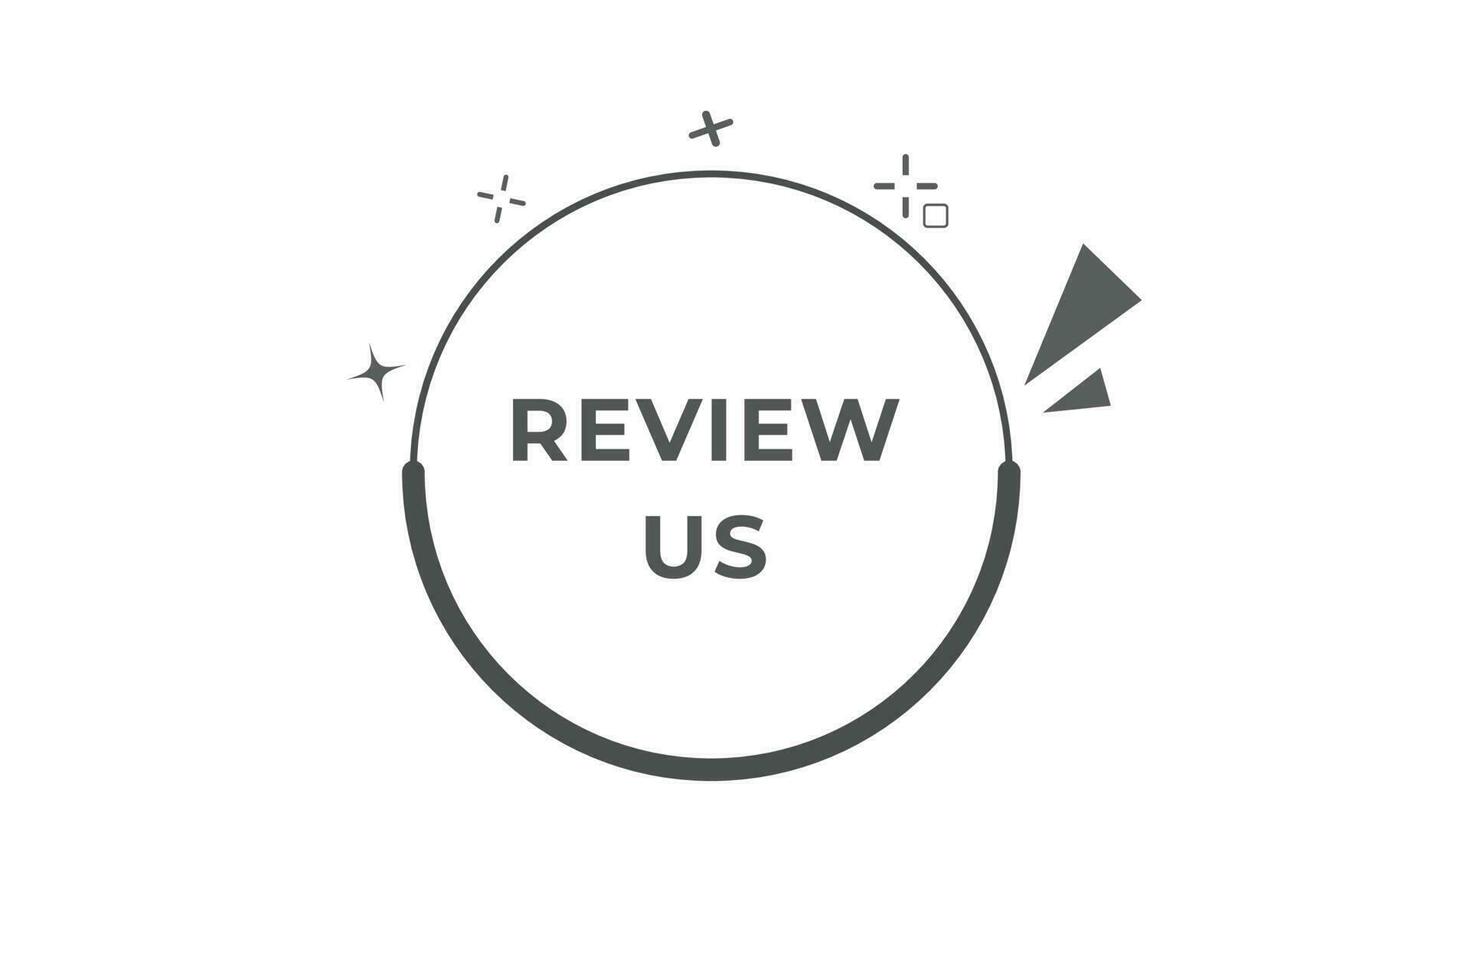 Review Us Button. Speech Bubble, Banner Label Review Us vector